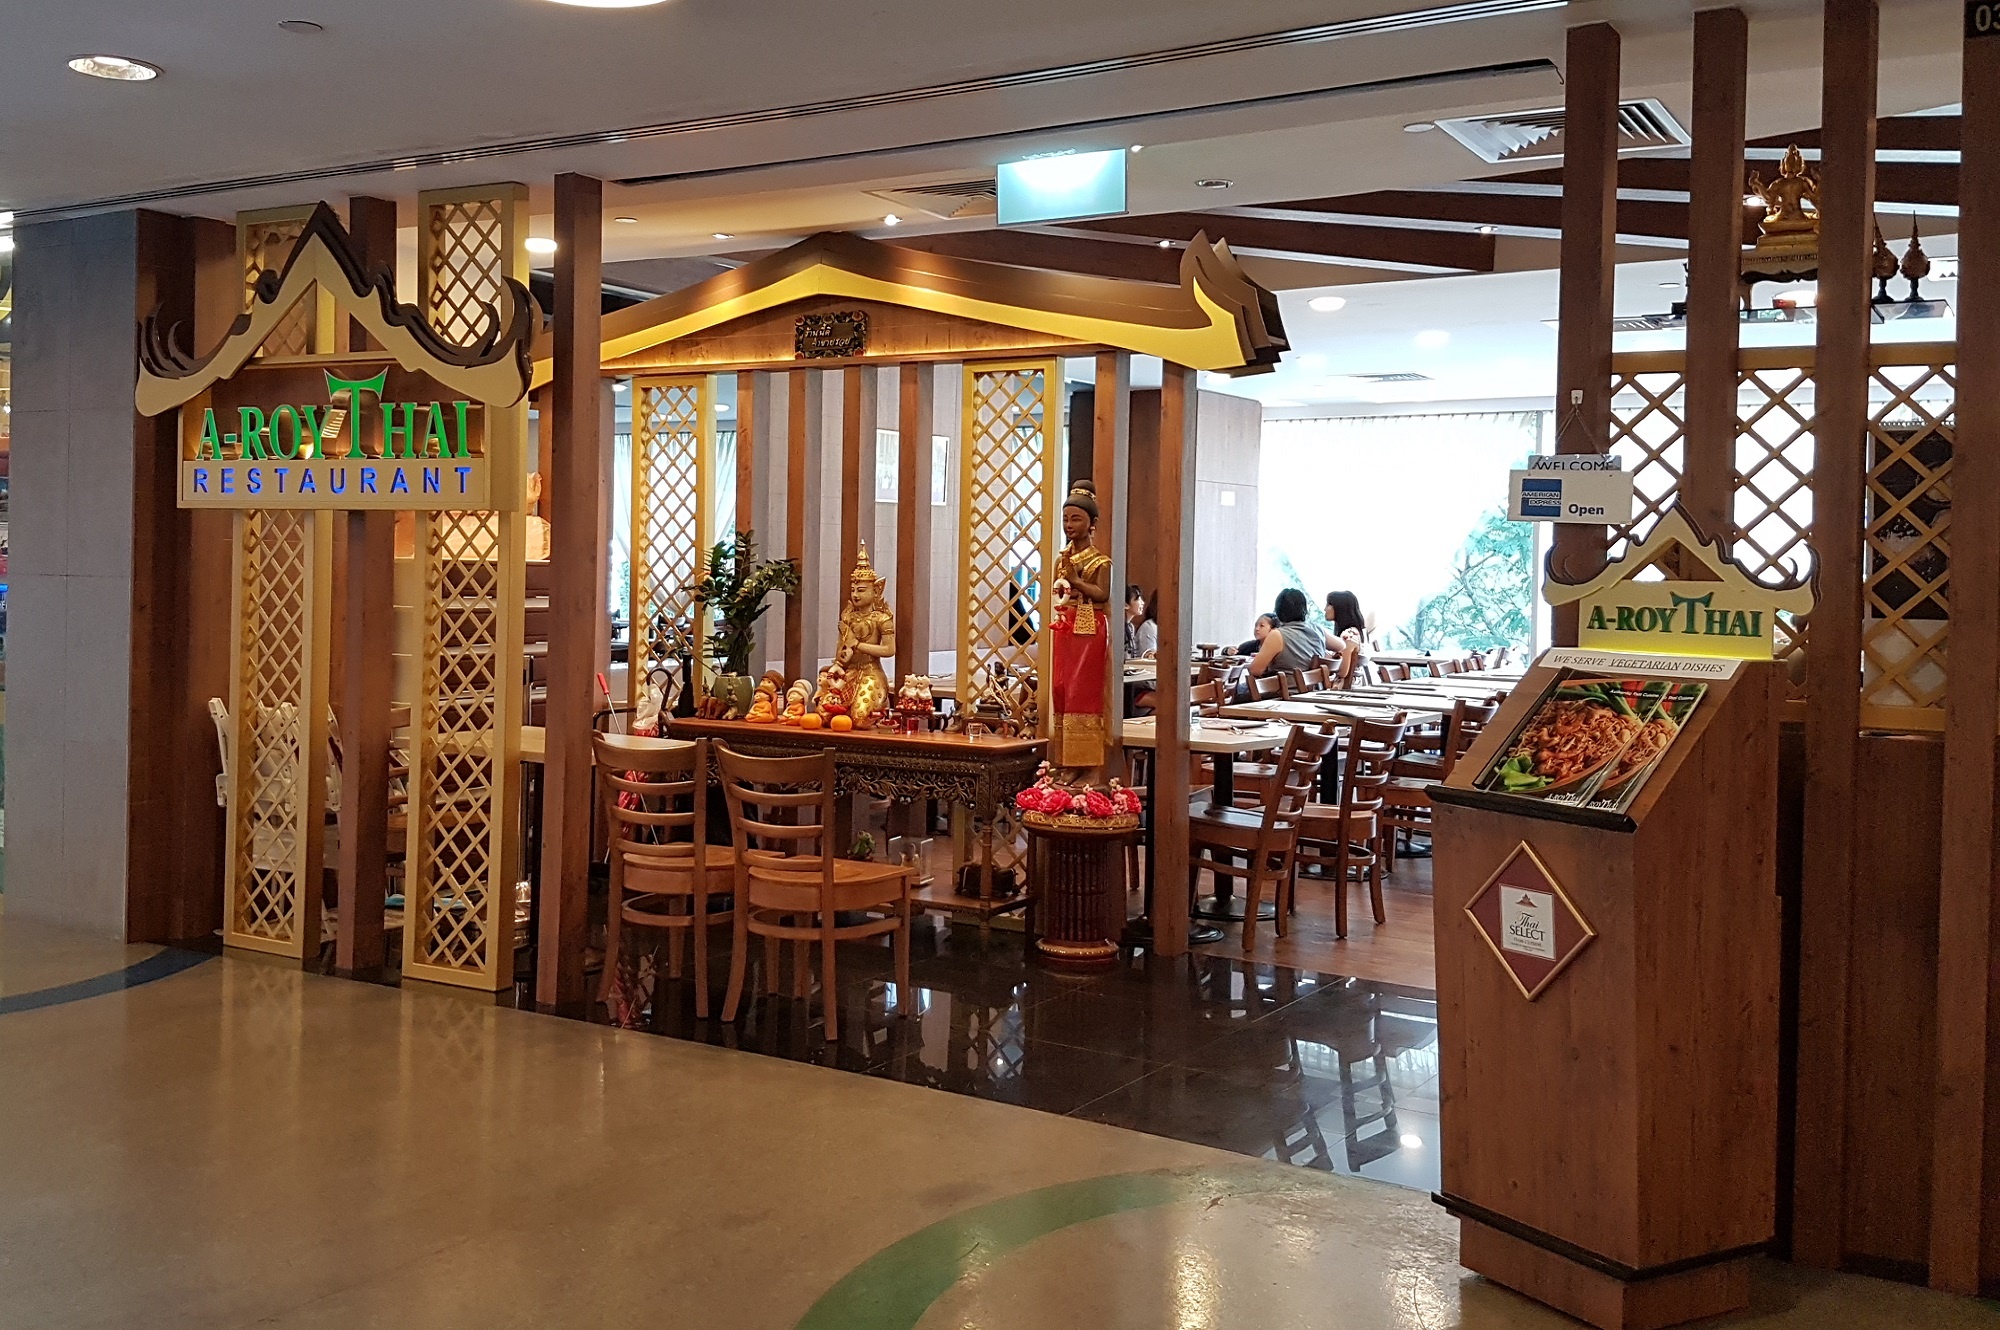 A-Roy Thai Restaurant at Velocity @ Novena Square hero image